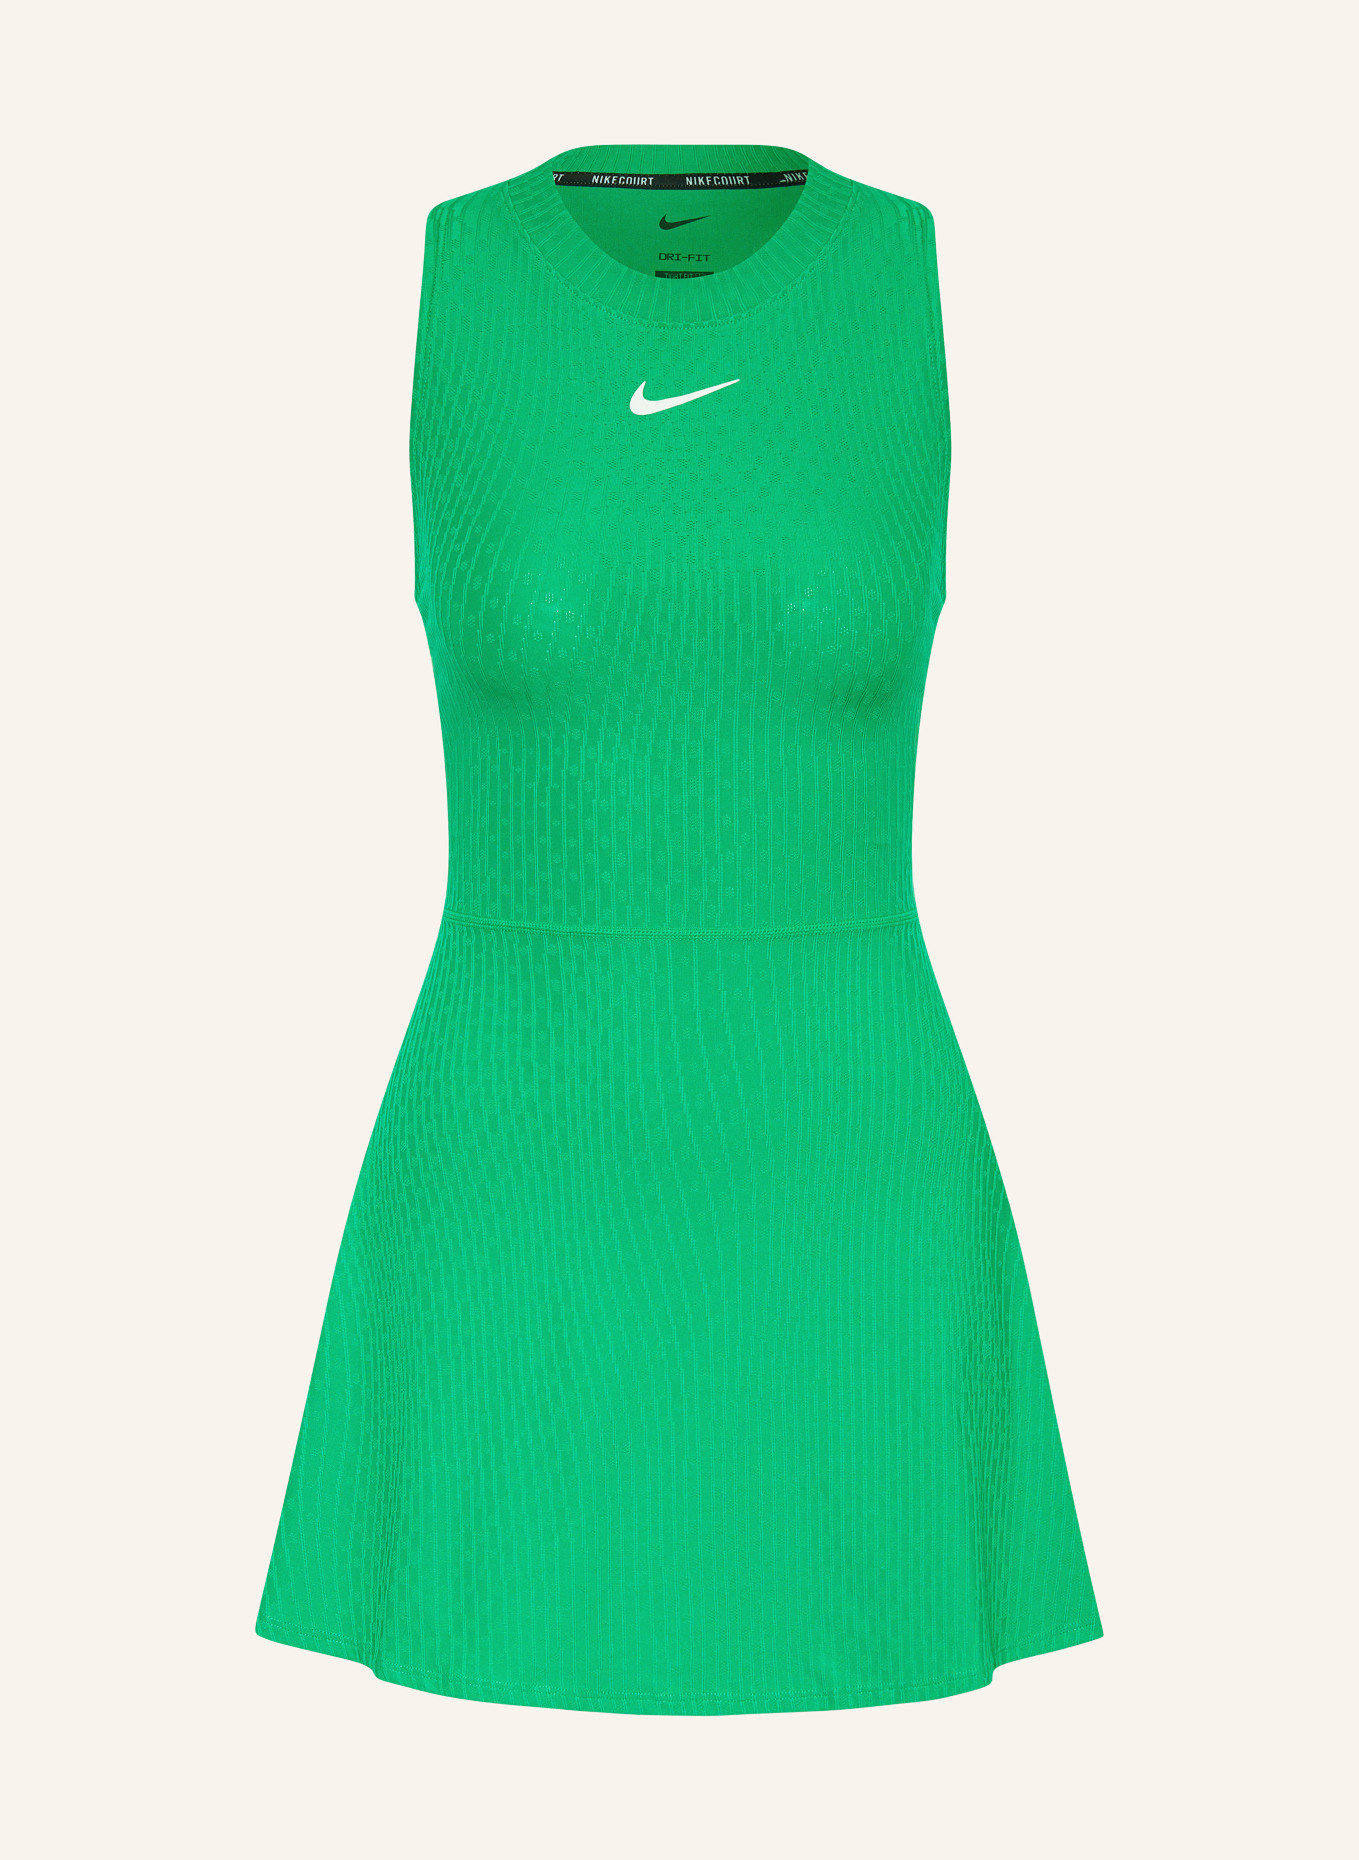 NikeCourt Slam Women's Dri-FIT Tennis Dress.